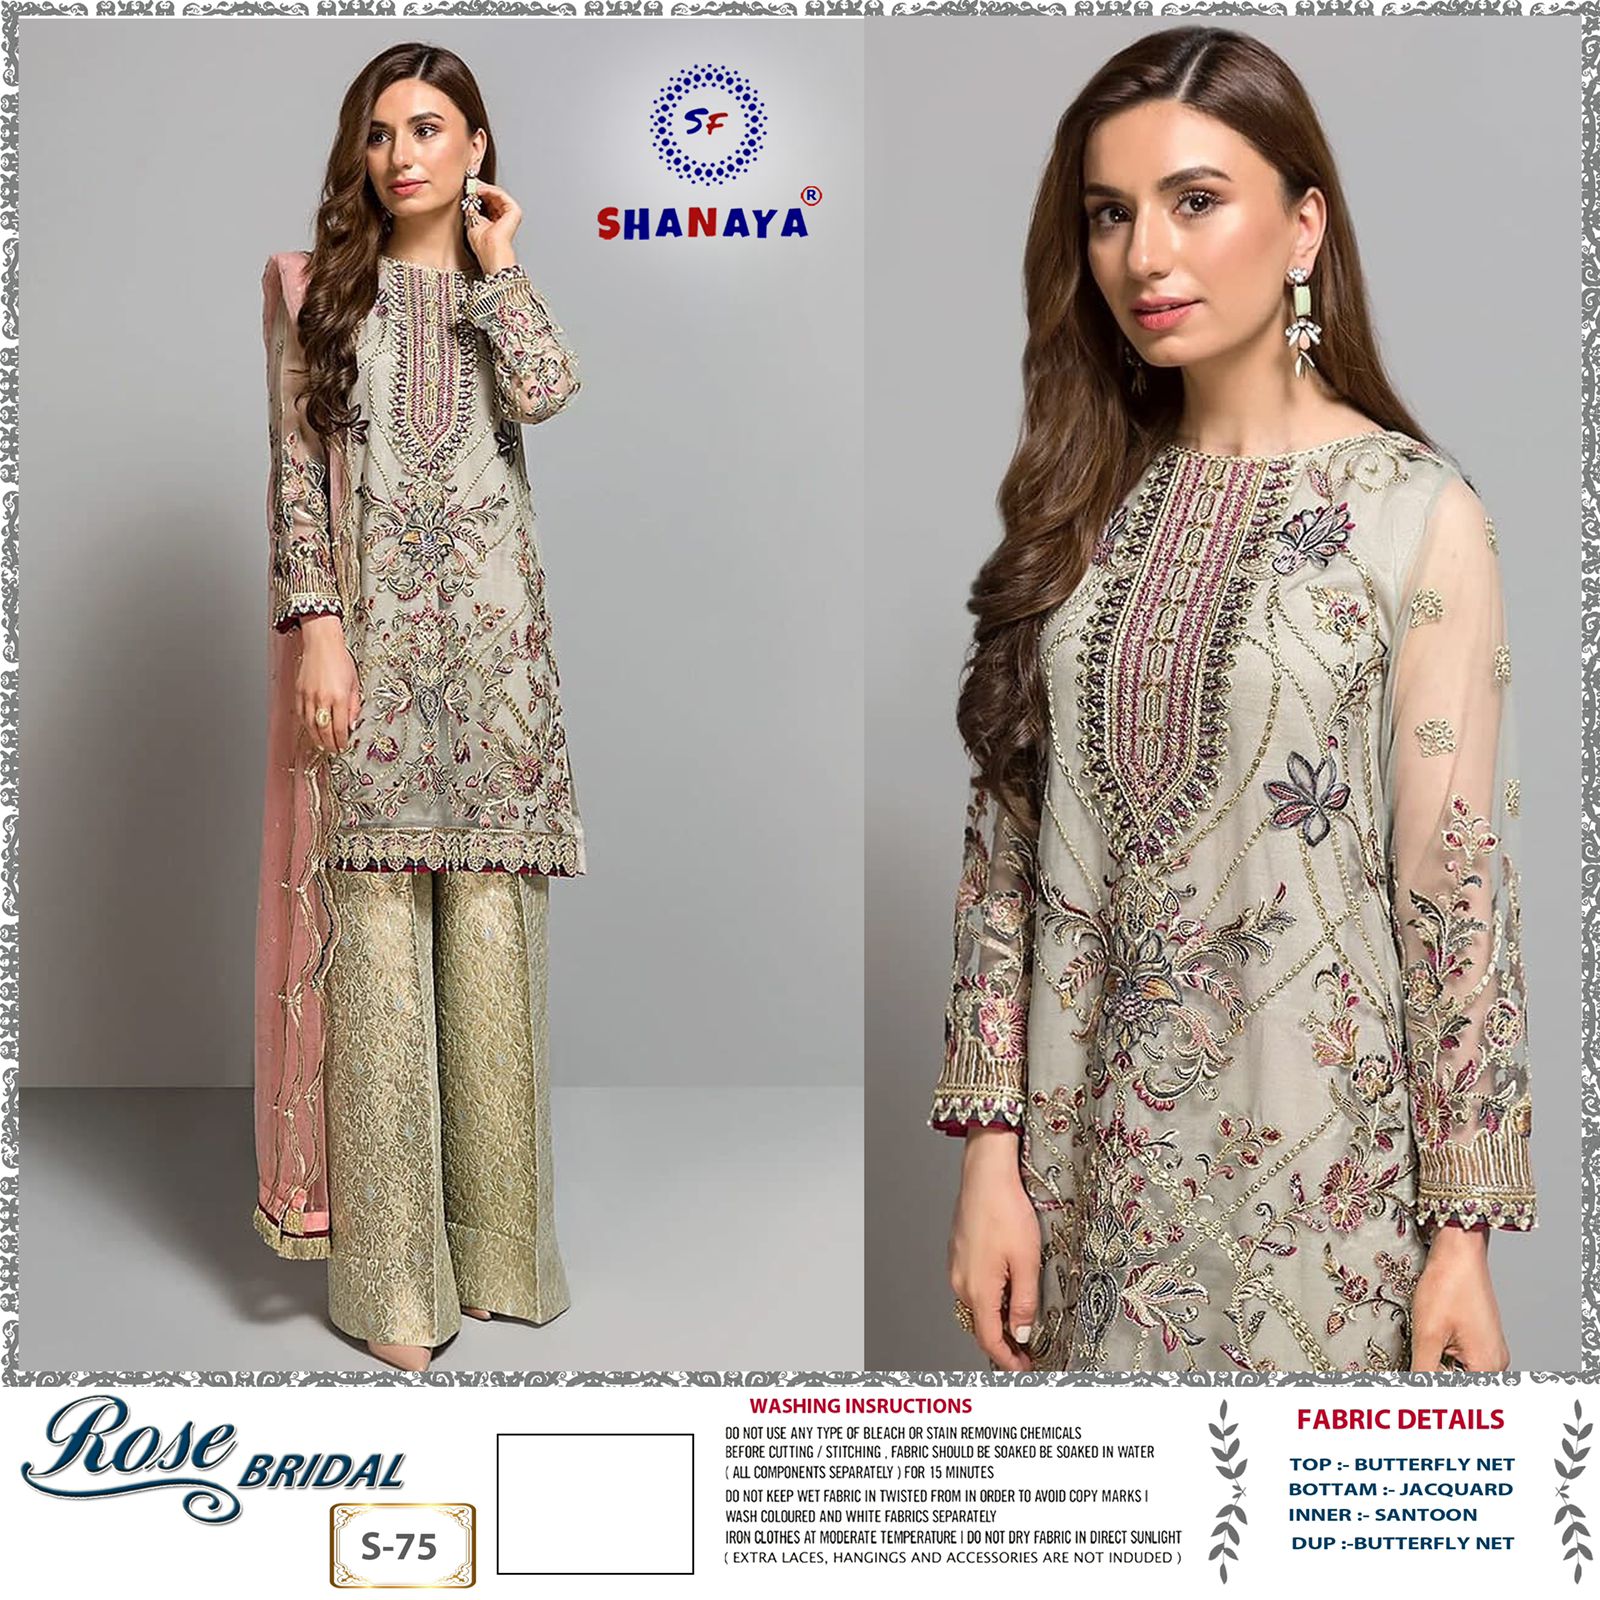 shanaya rose bridal s 75 butterfly net innovative look salwar suit single